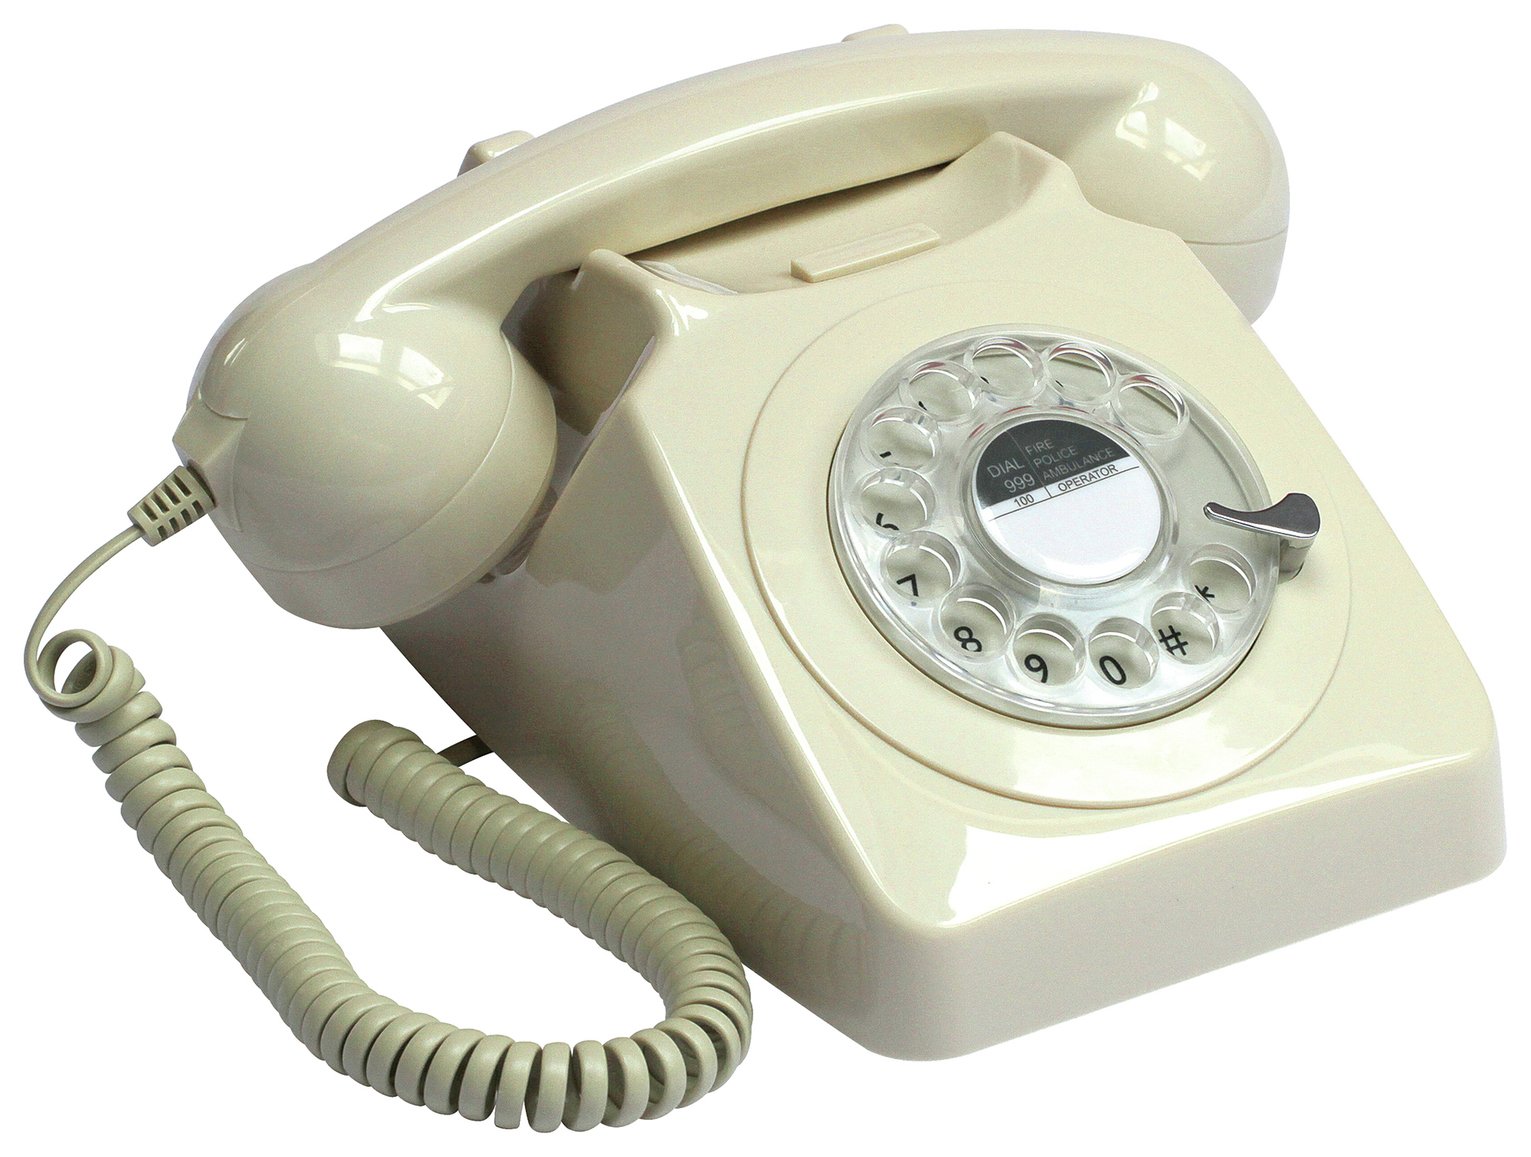 Телефон аппарат стационарный. Ретро телефон GPO 746 Rotary. Телефонный аппарат. Телефонный аппарат стационарный. Телефонный аппарат стационарный дисковый.